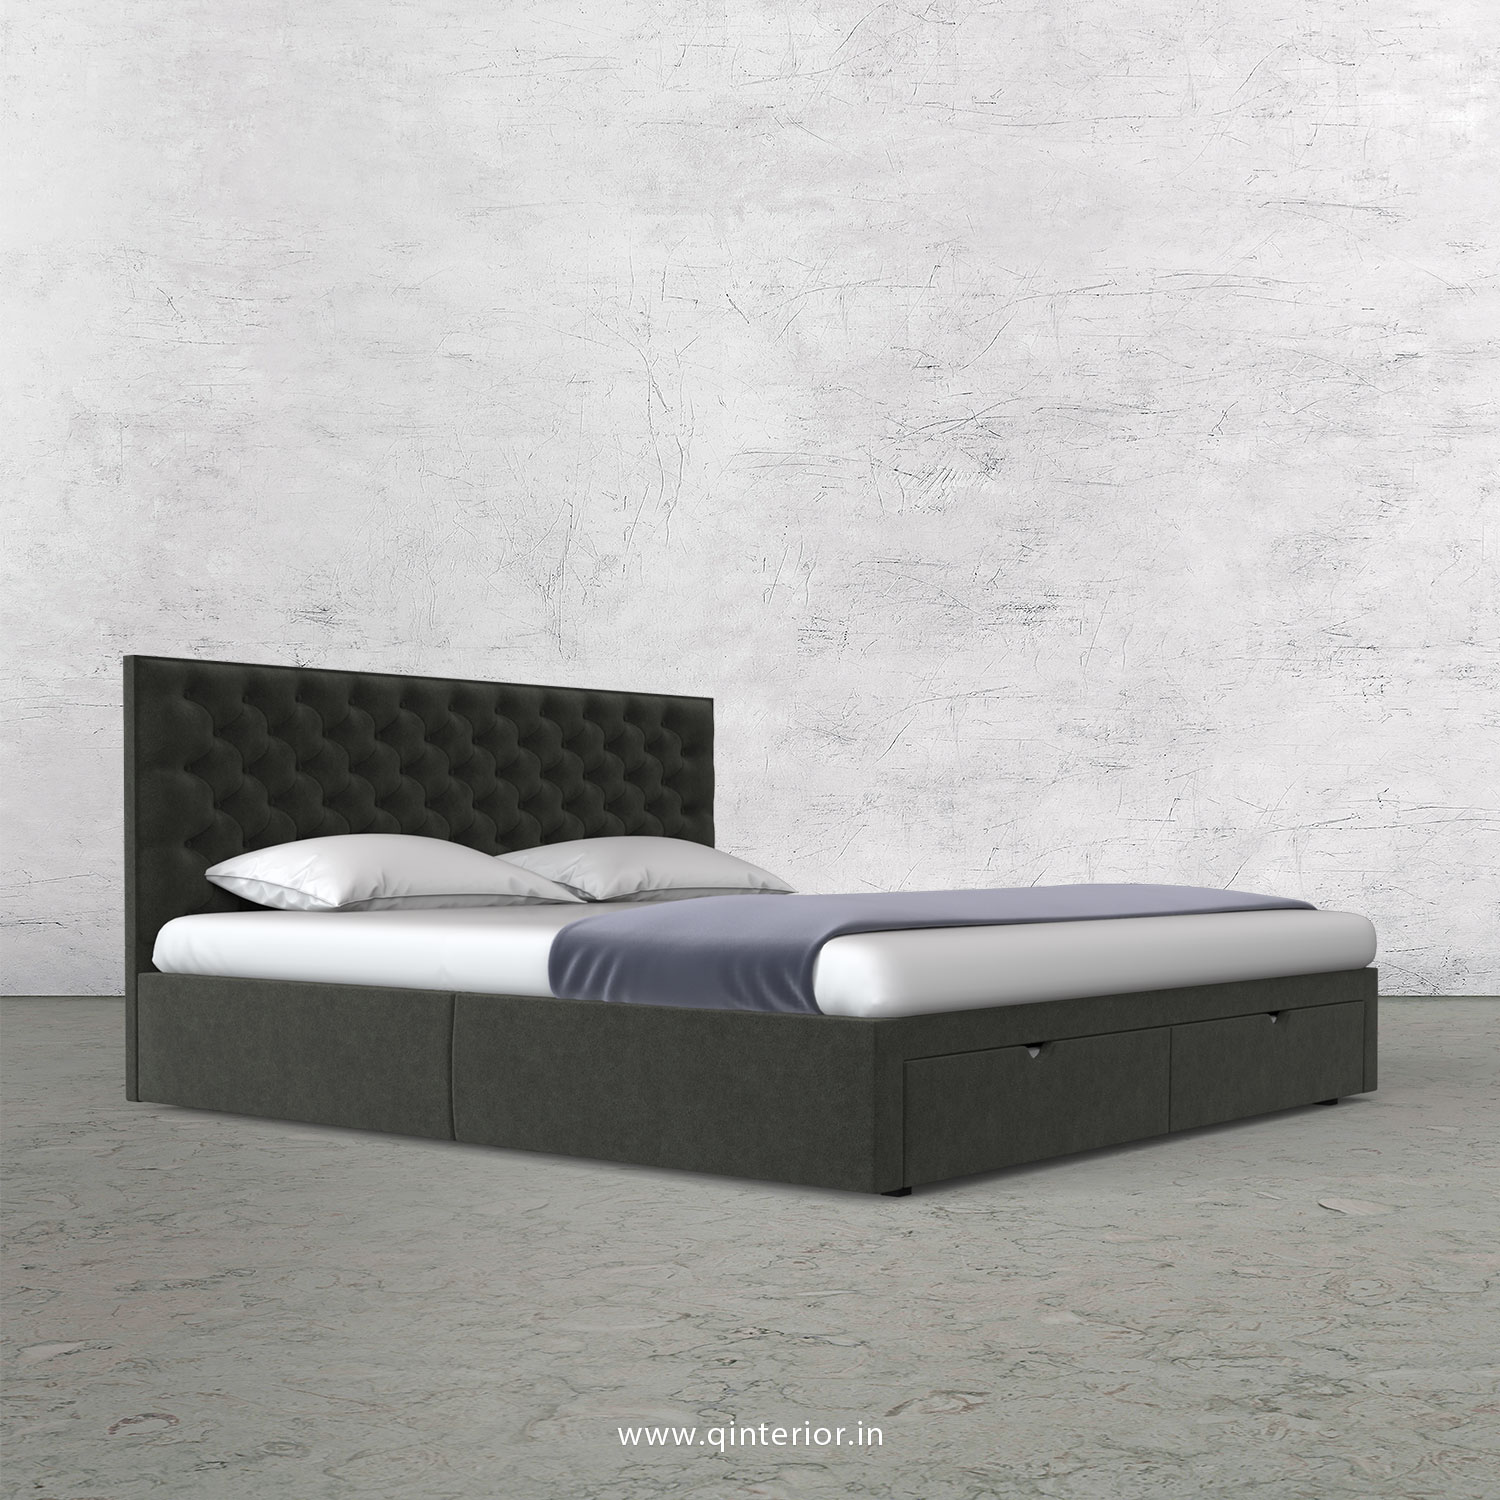 Orion King Size Storage Bed in Velvet Fabric - KBD001 VL15